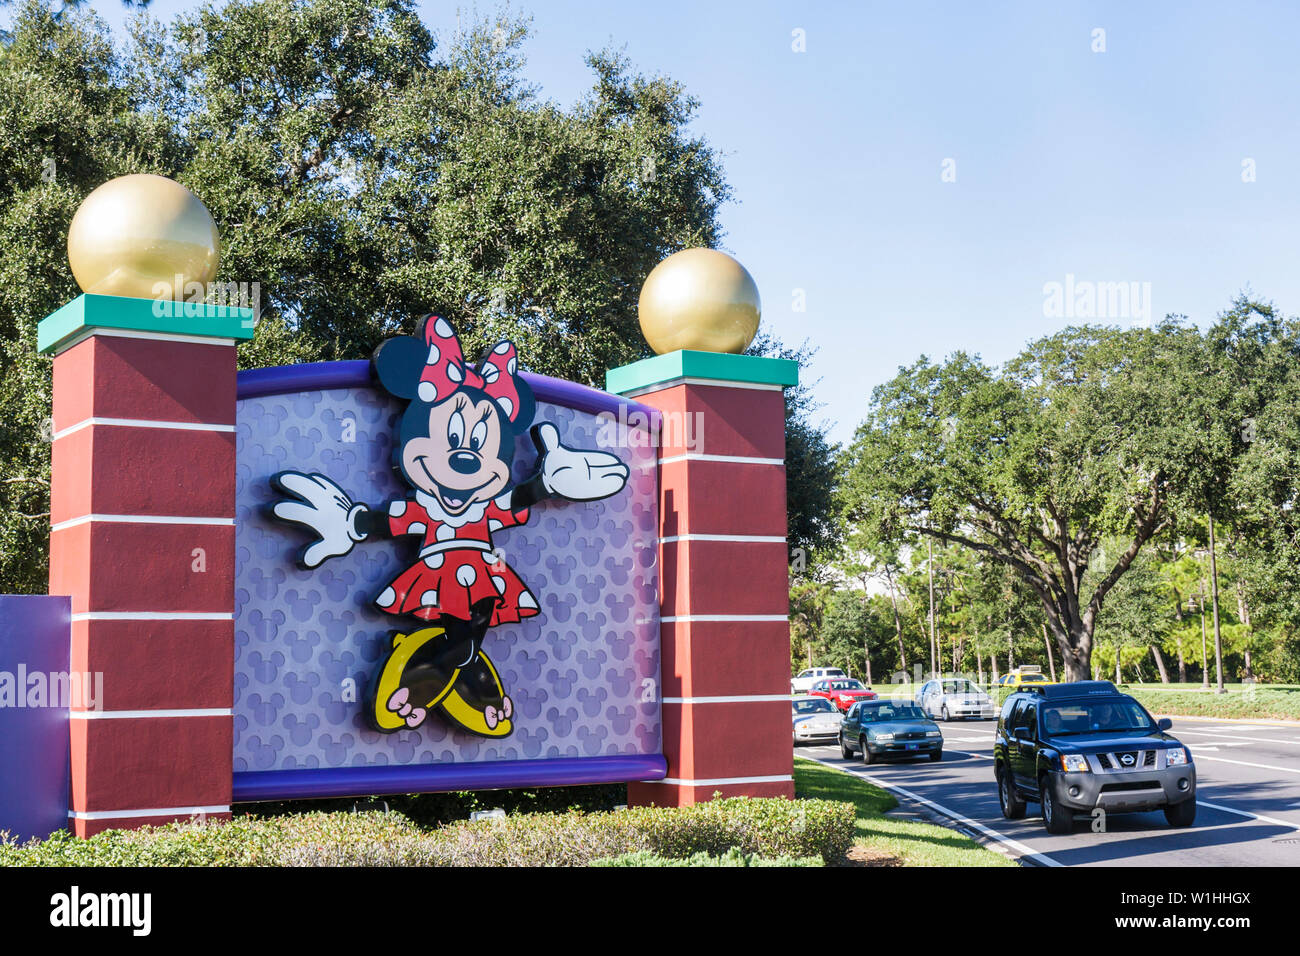 Orlando Florida,Buena Vista,Walt Disney World Resort,ingresso,fronte,cartello,Minnie mouse,personaggio cartoon,parco a tema,intrattenimento,pois polka,strada,tr Foto Stock